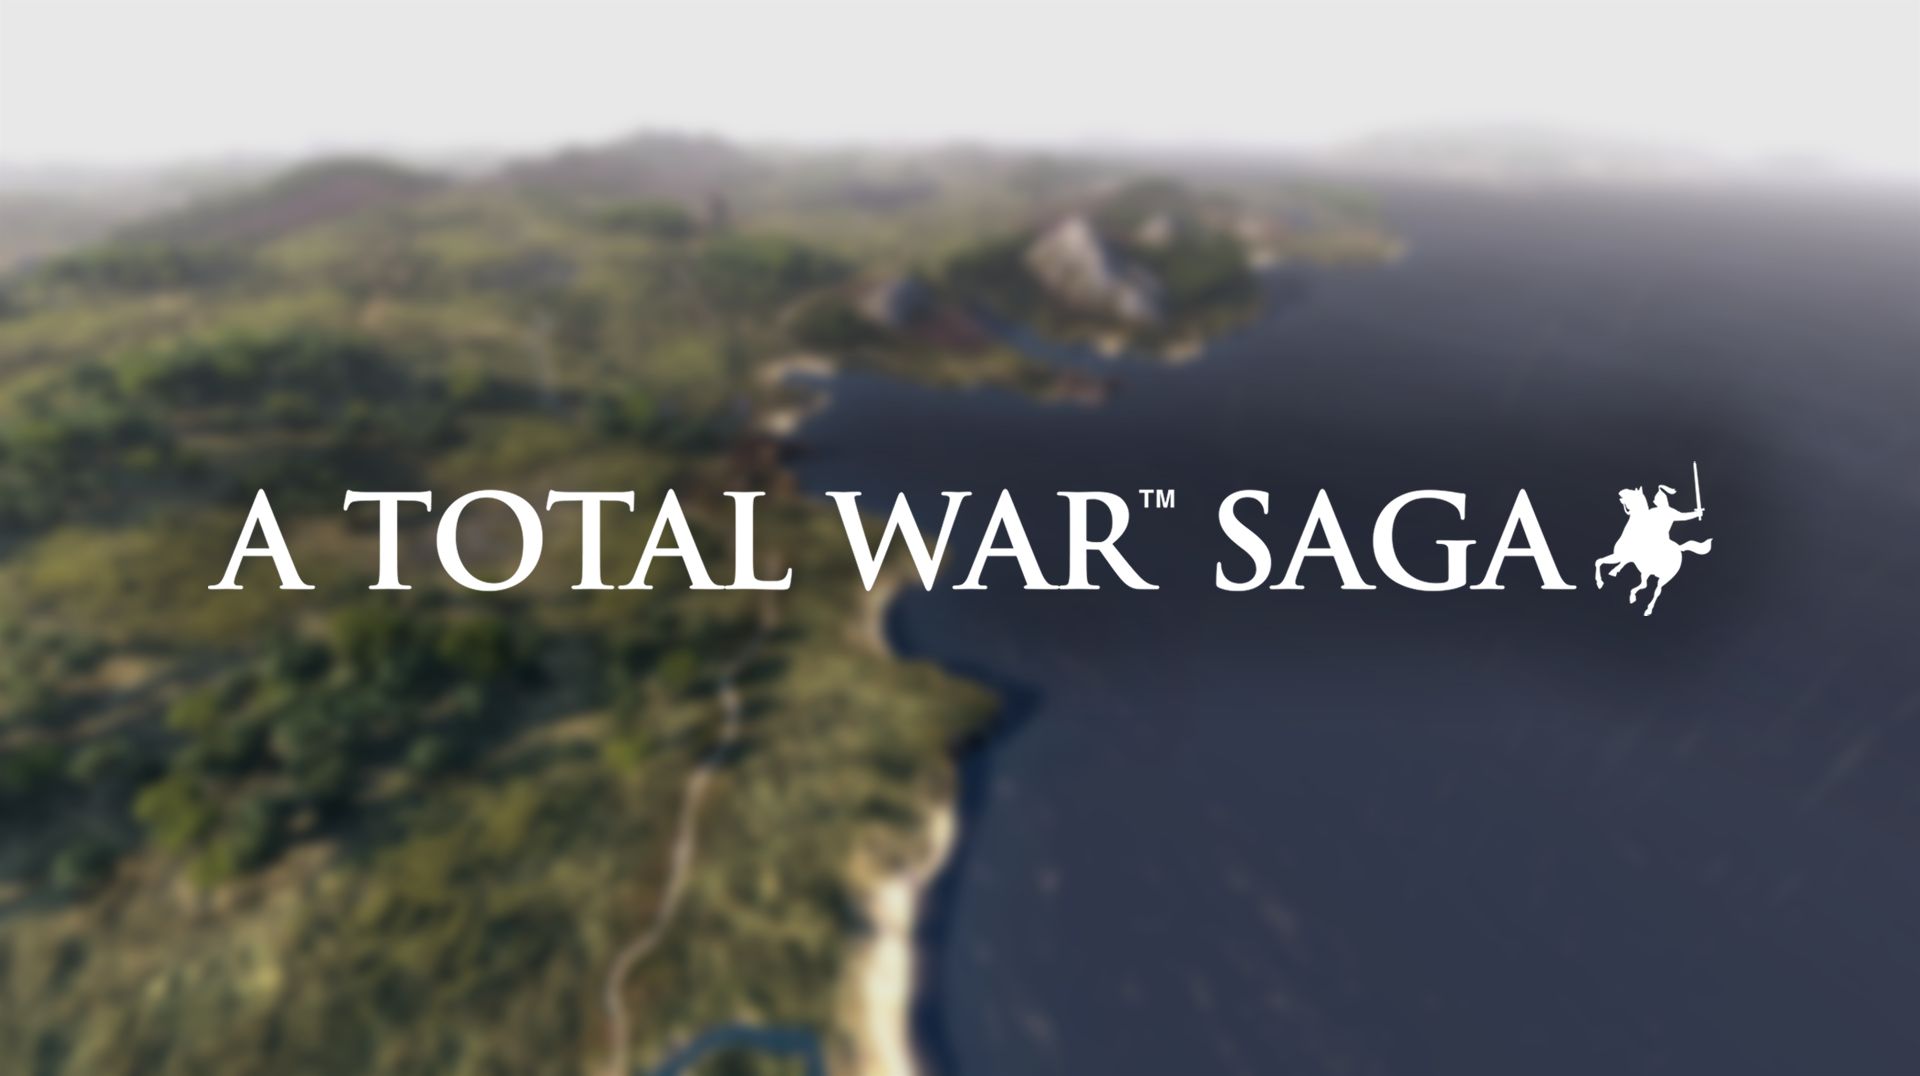 total-war-saga-logo__05-07-17.jpg